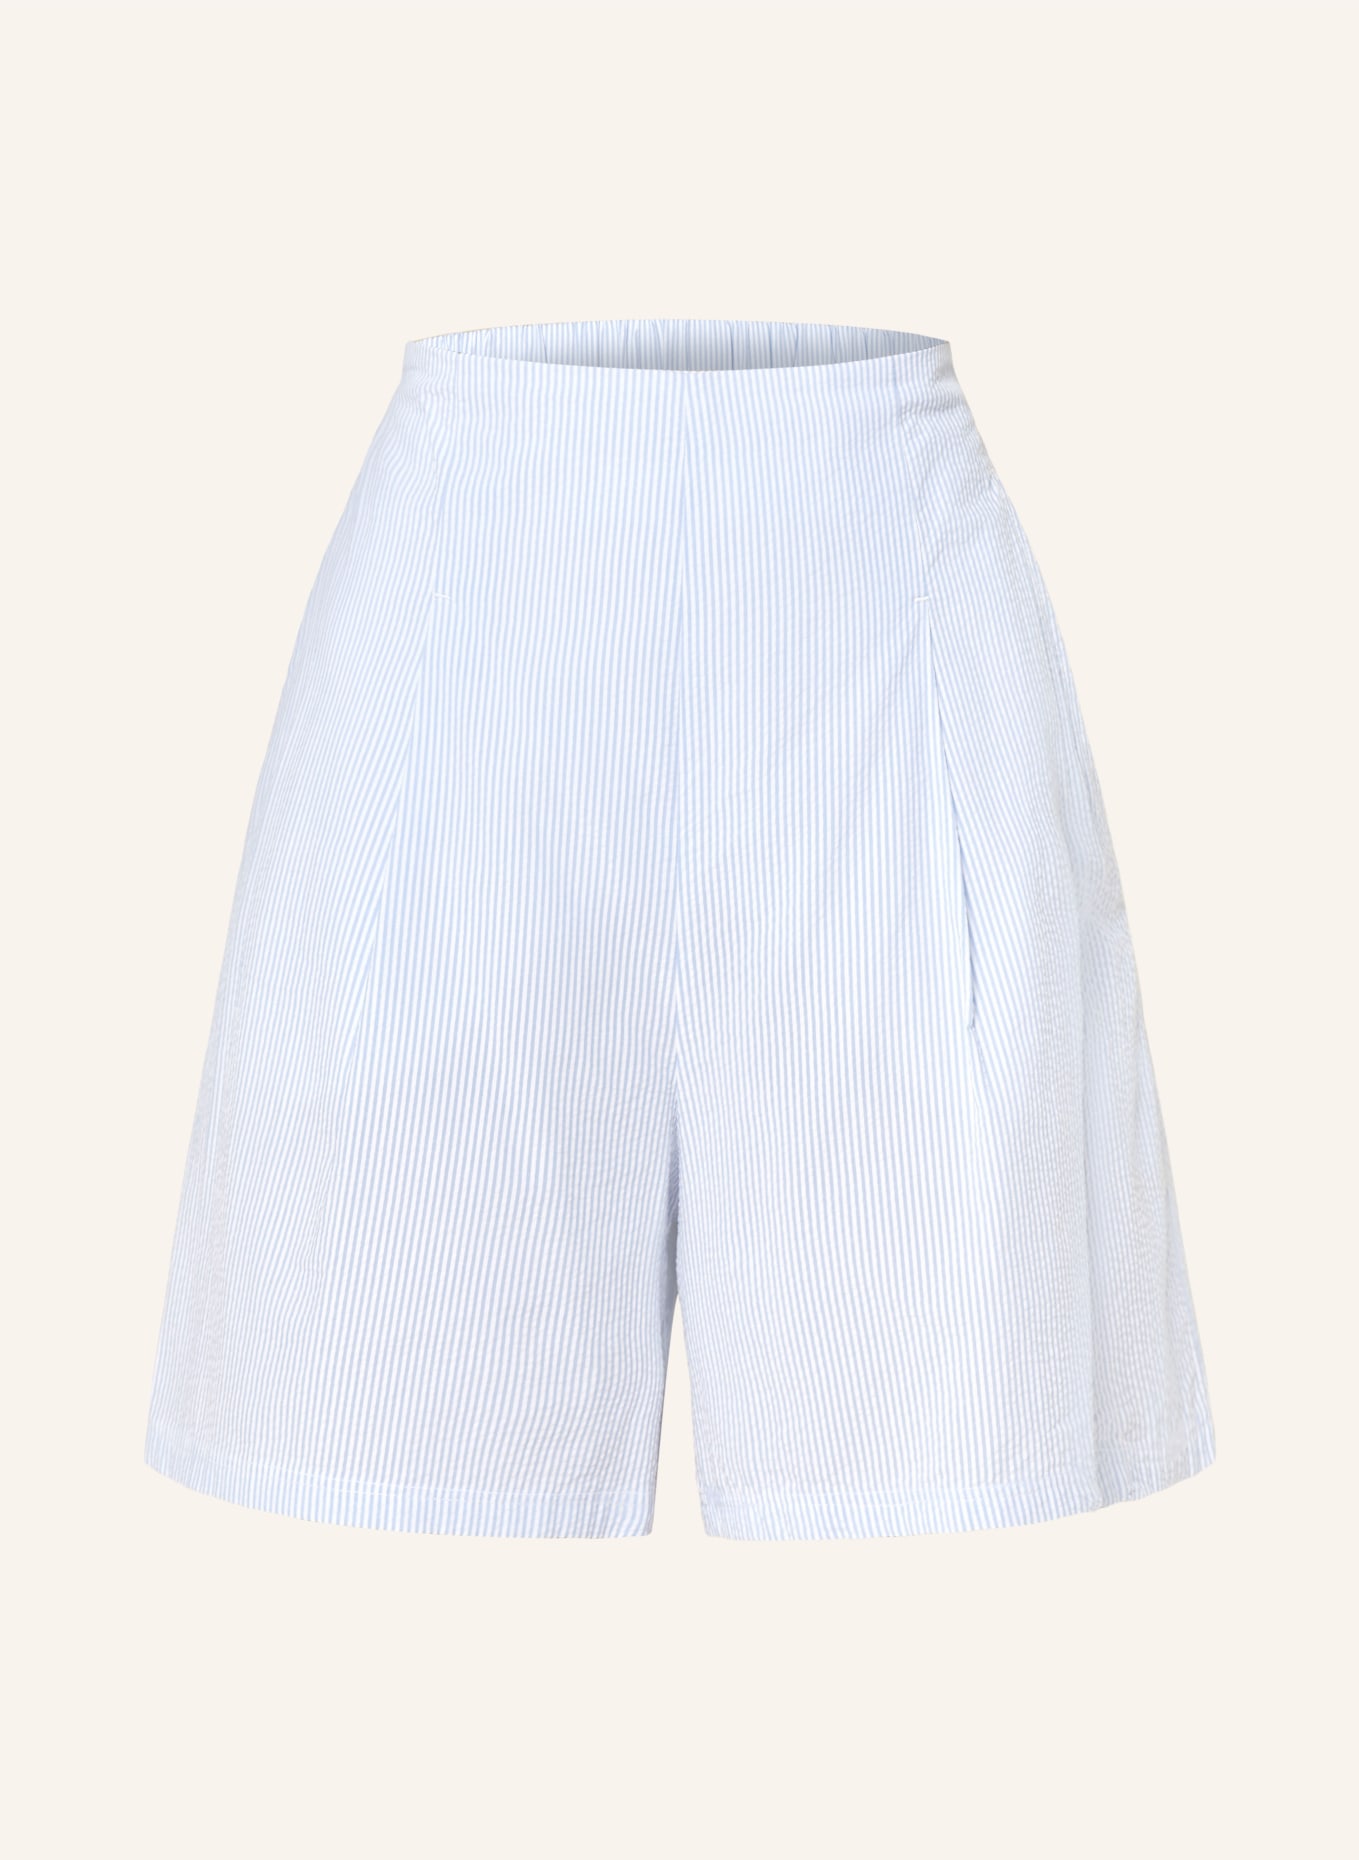 MaxMara LEISURE Shorts CANALE, Farbe: WEISS/ HELLBLAU (Bild 1)